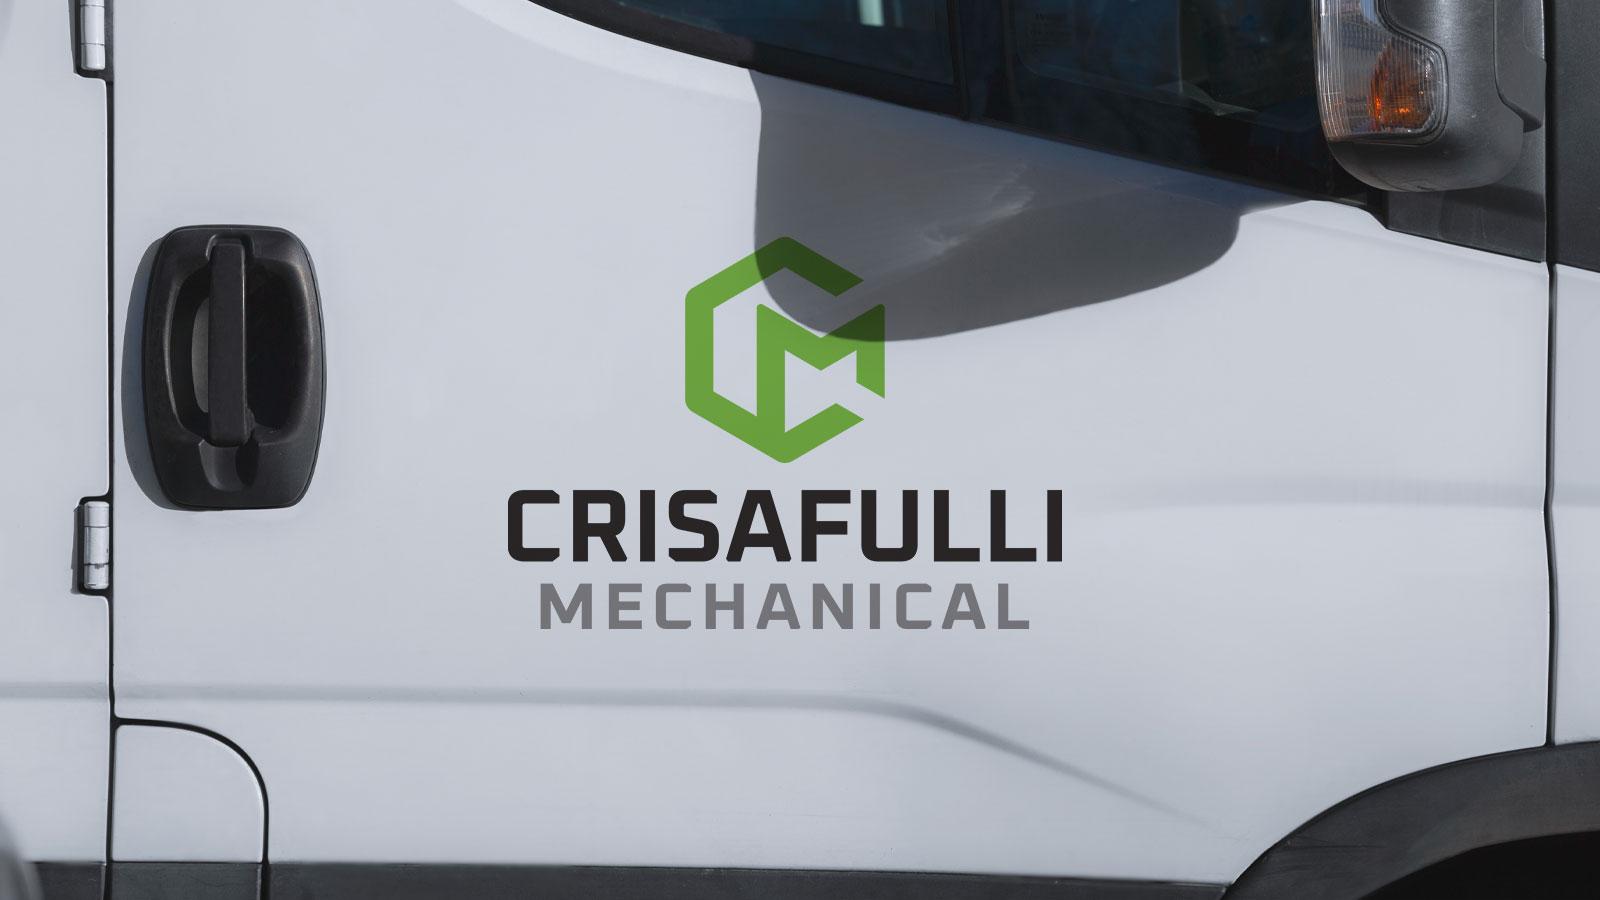 Crisafulli Mechanical | Truck Door